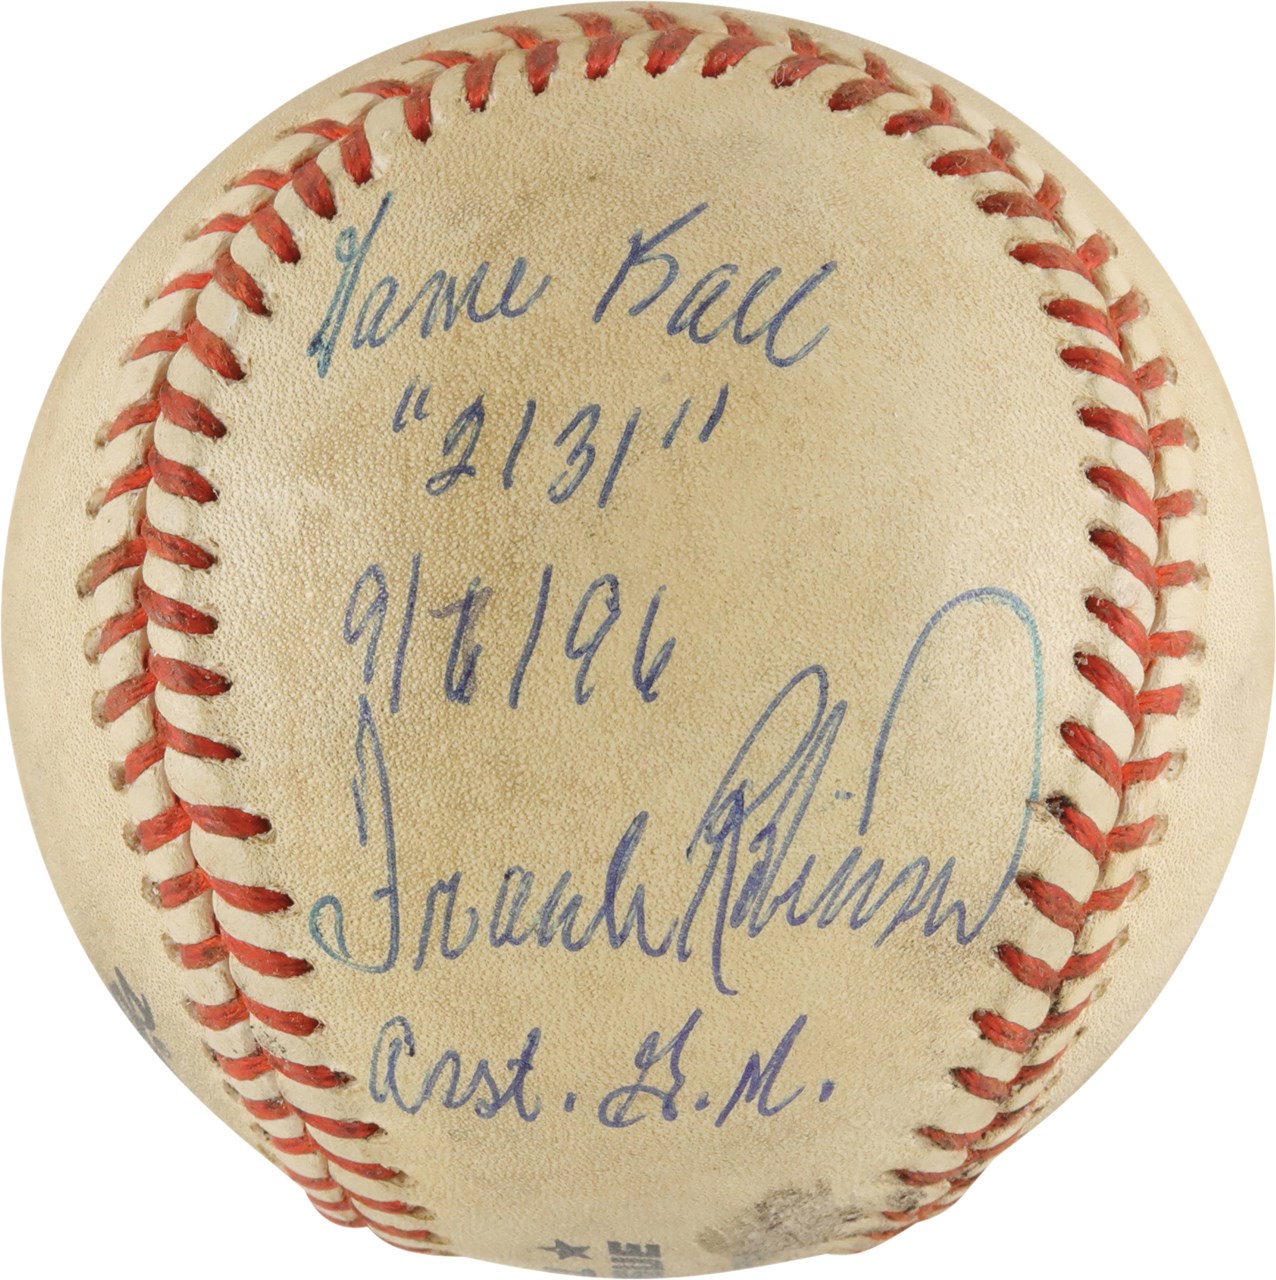 Baseball Equipment - Cal Ripken Jr. 2,131 Game Ball Signed and Inscribed By Frank Robinson (PSA)